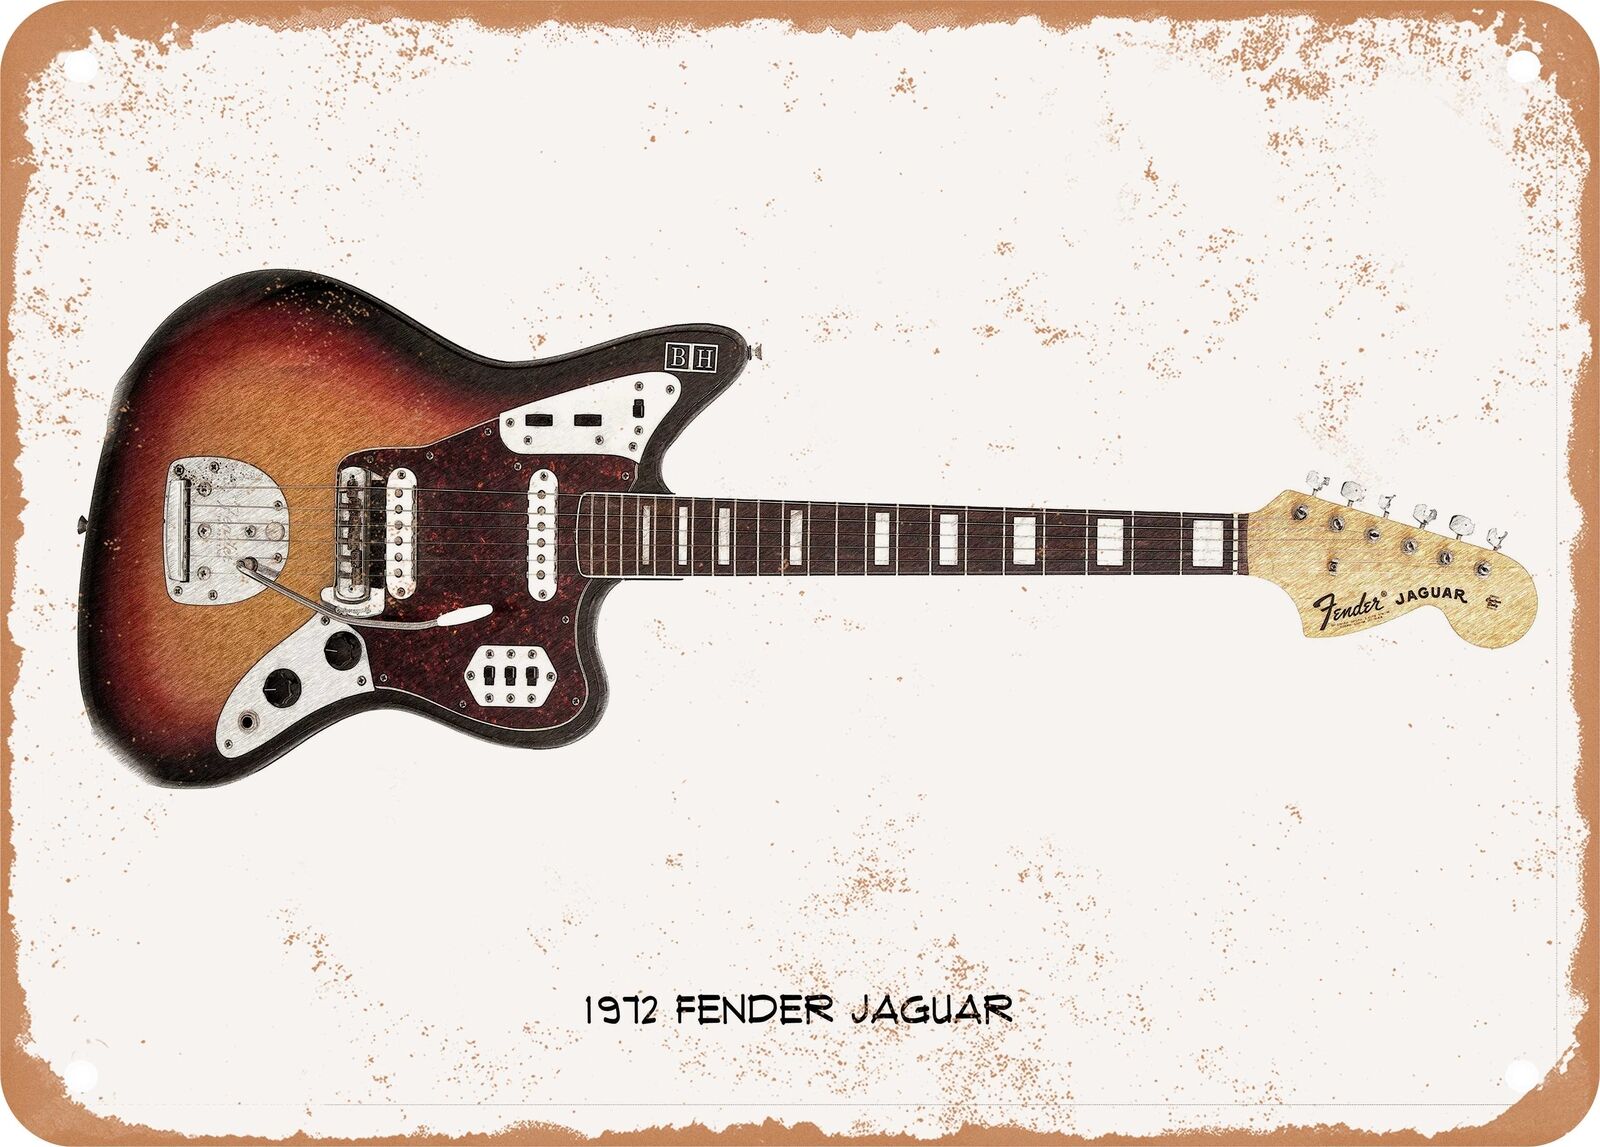 Guitar Art - 1972 Fender Jaguar Pencil Drawing - Rusty Look Metal Sign